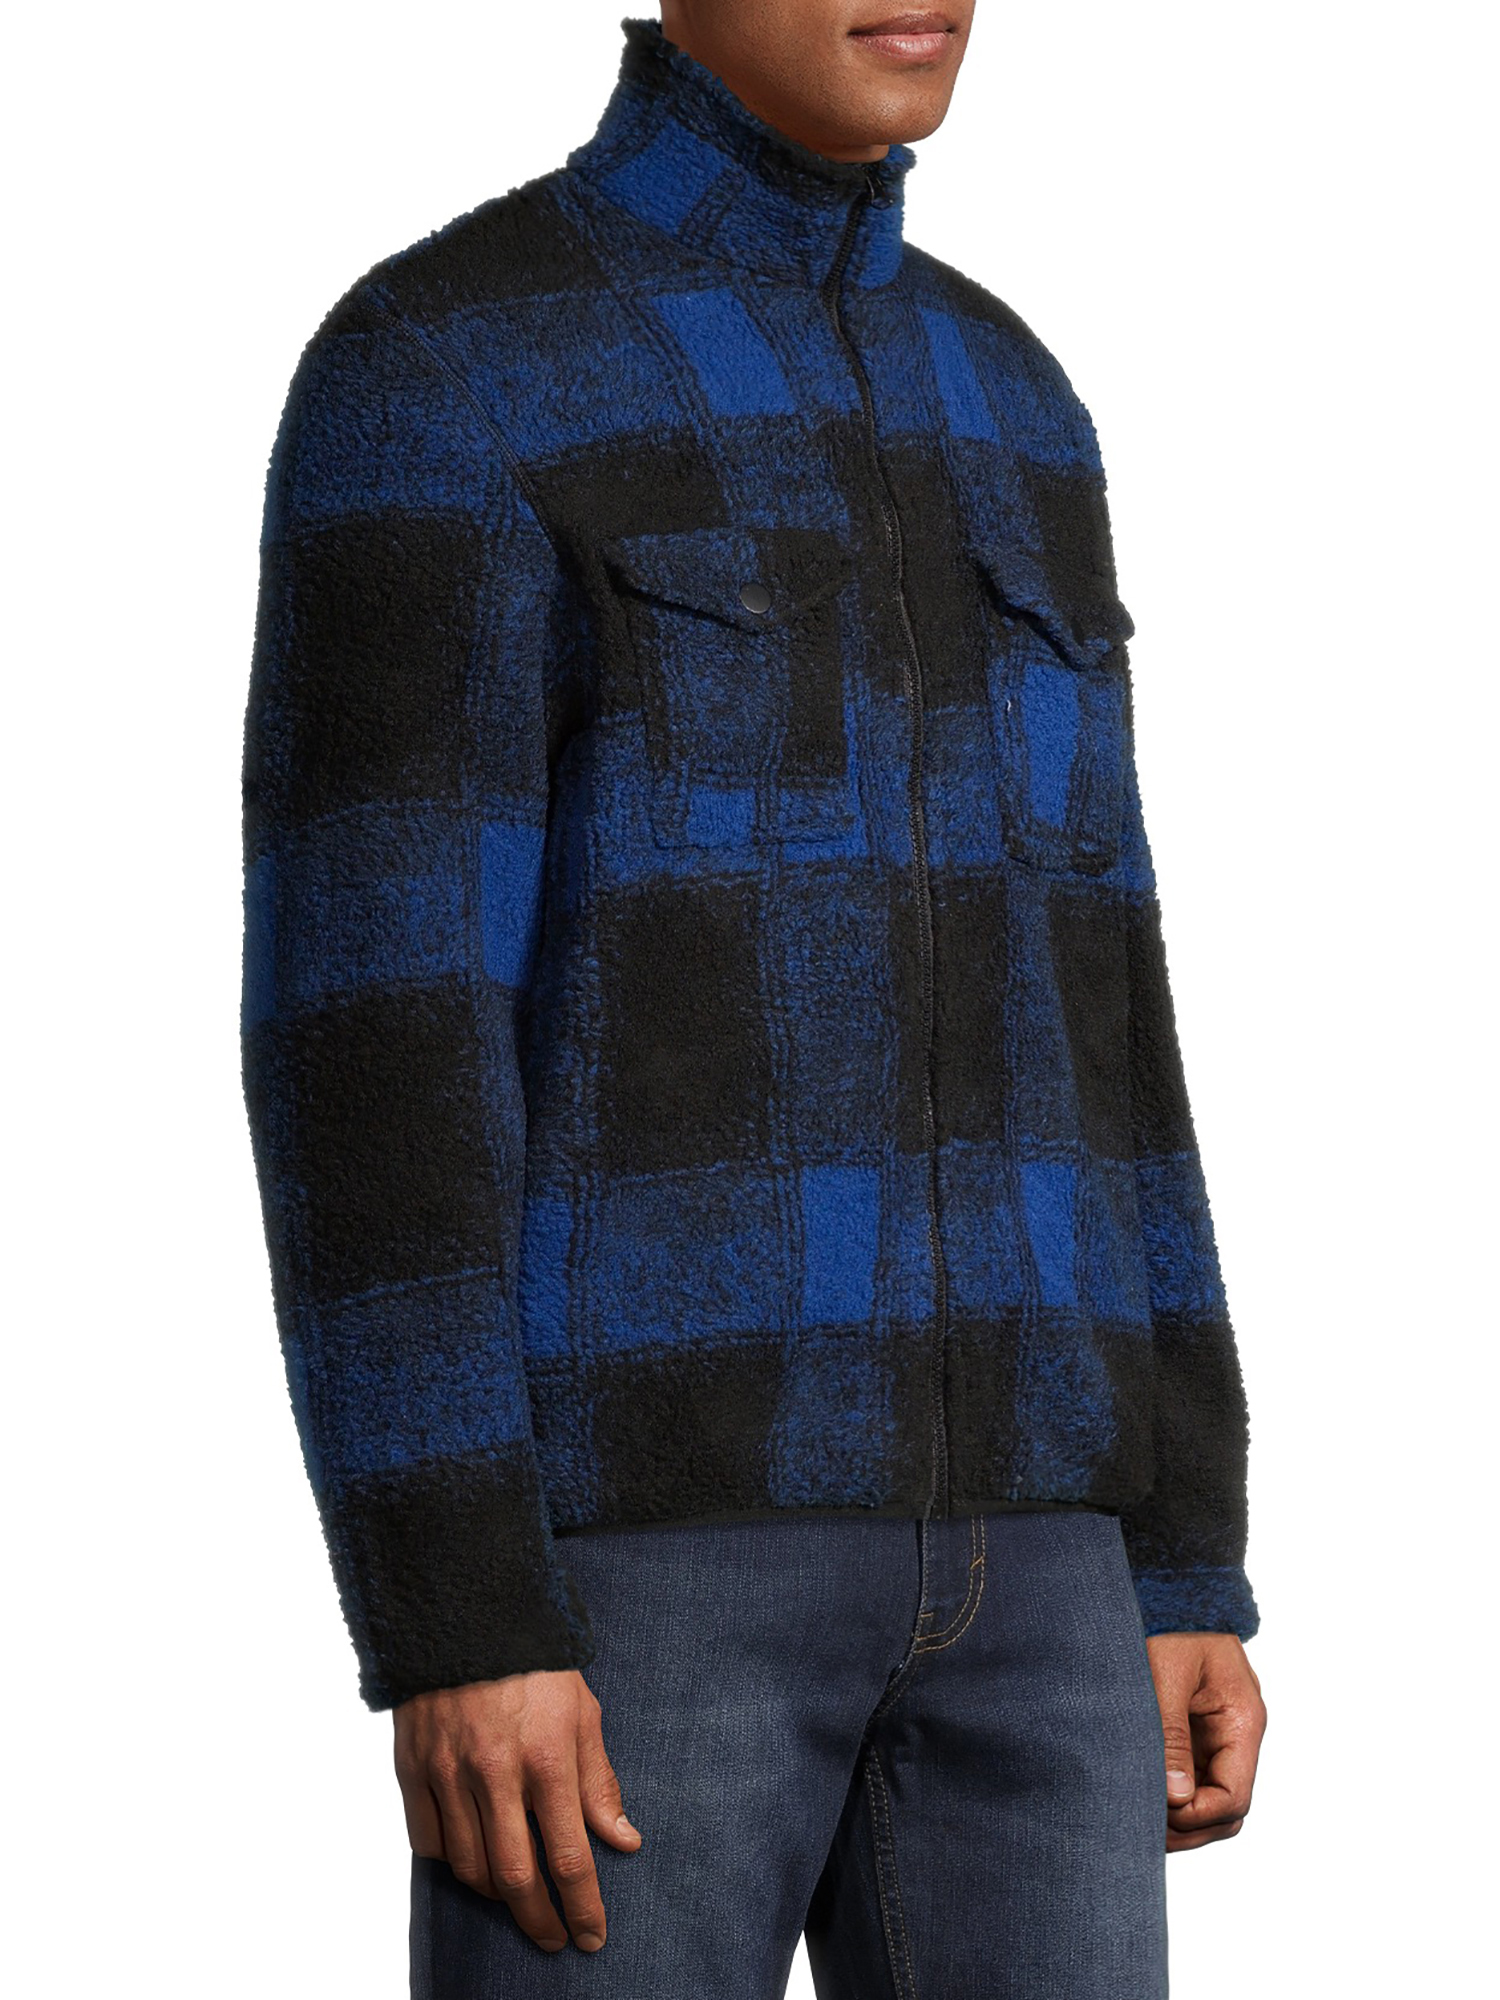 I5 Apparel Men's Buffalo Plaid Full Zip Sherpa Jacket, Sizes M-XXL - image 4 of 6